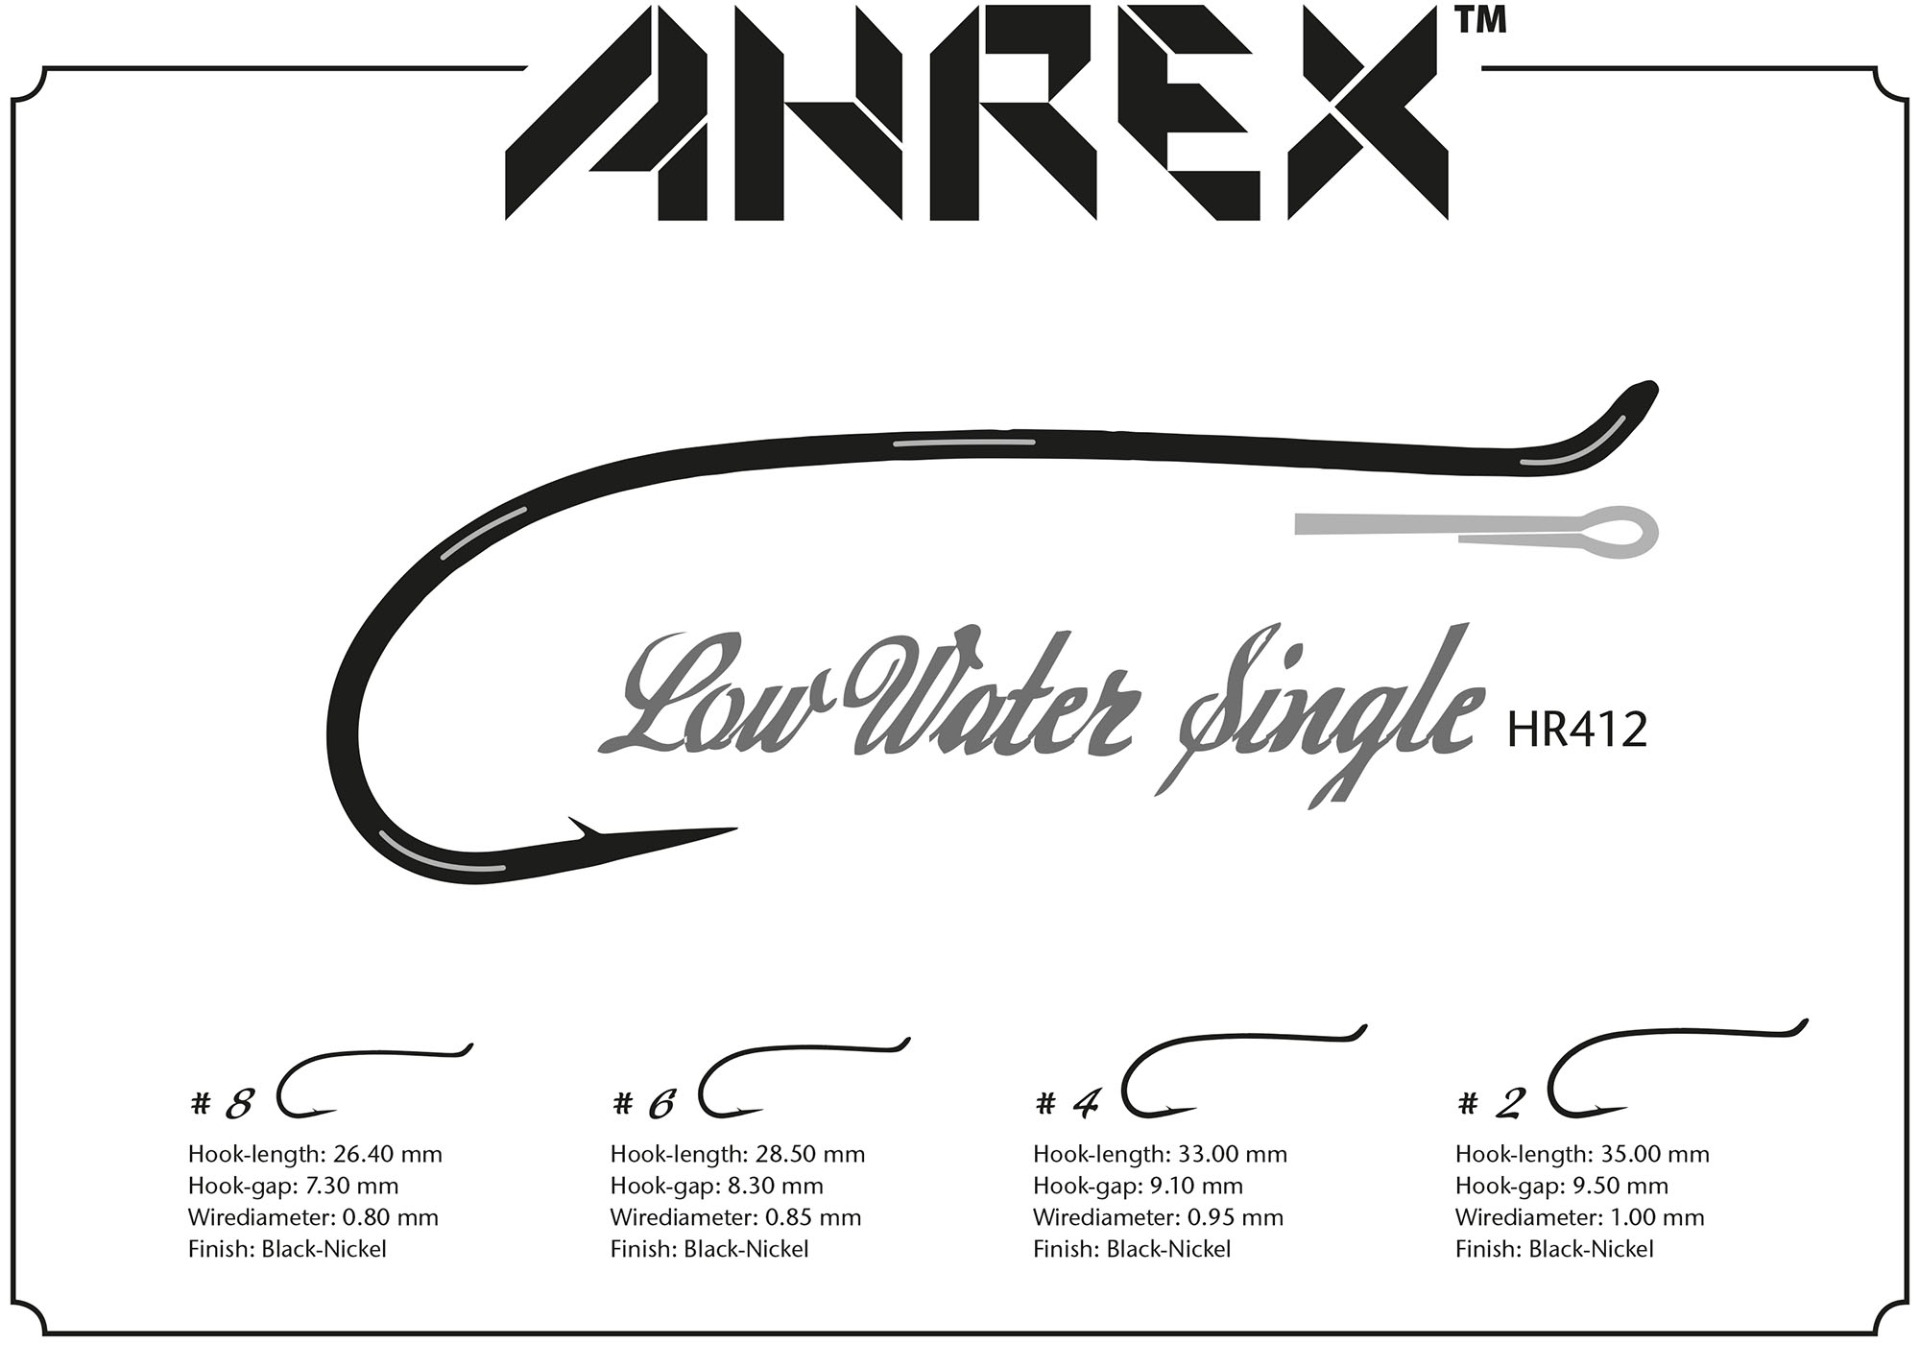 Ahrex Salmon Low Water Single #2